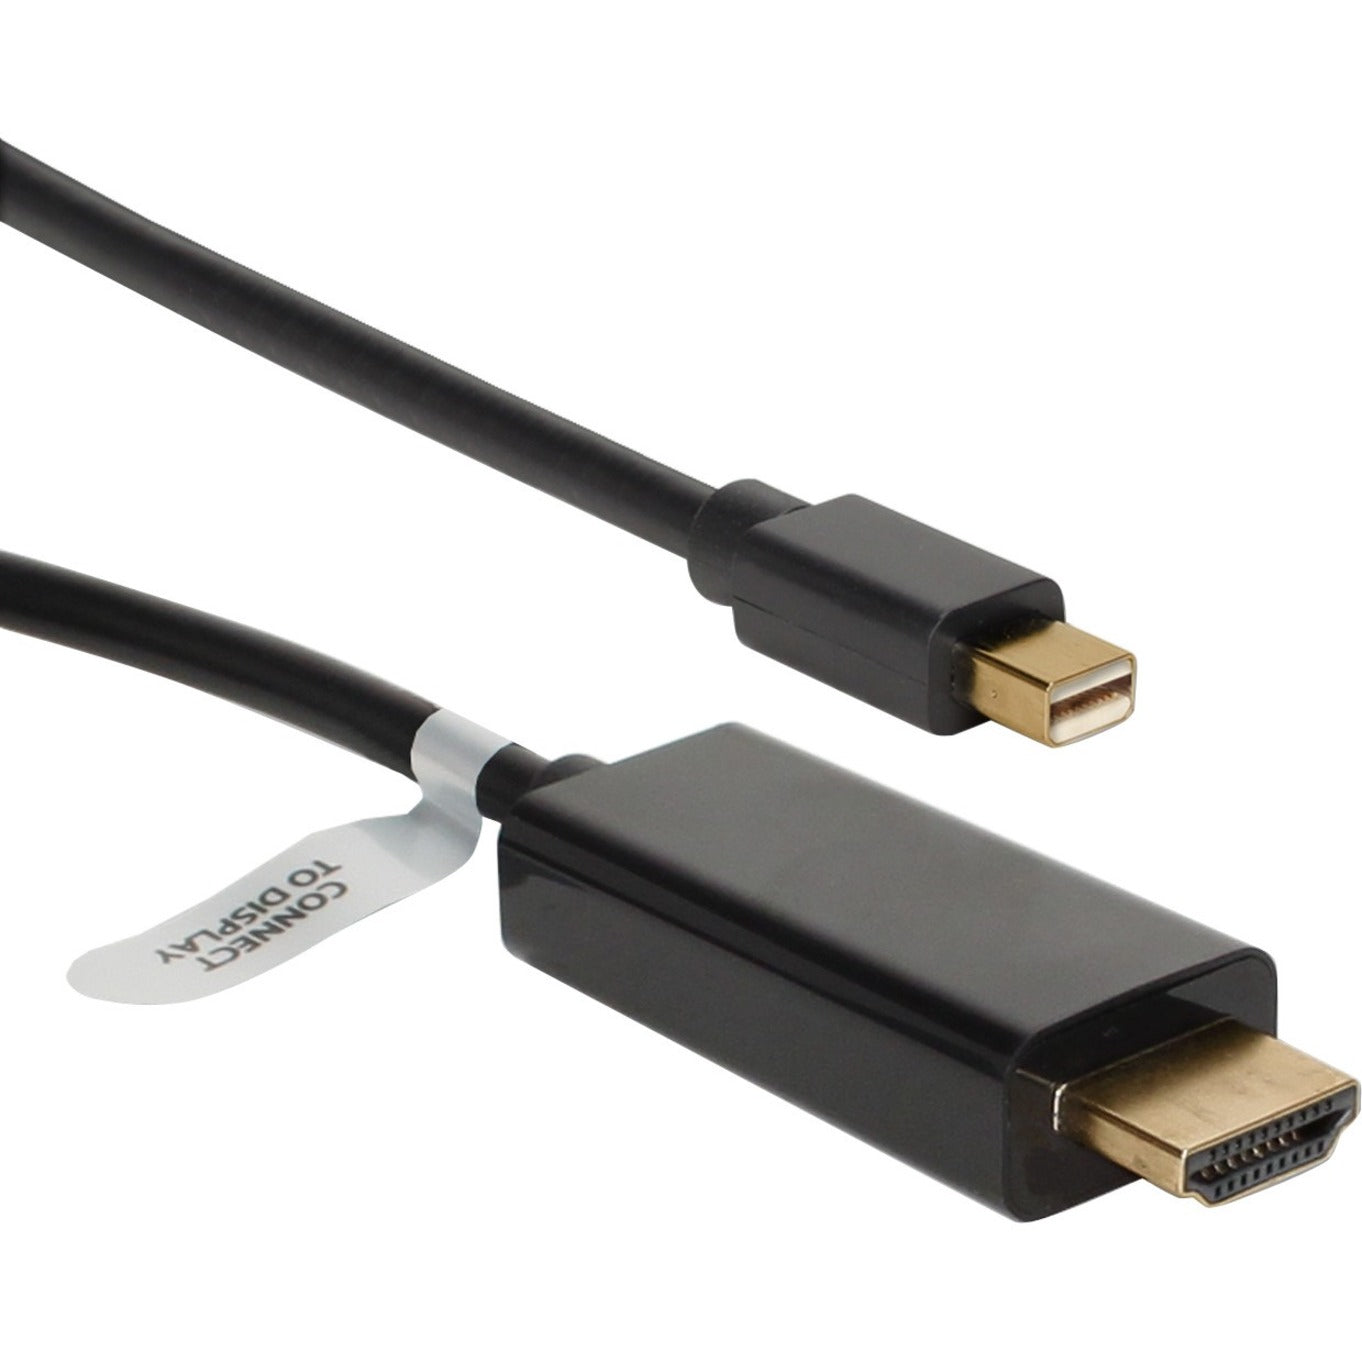 QVS MDPH-06BK 6ft Mini DisplayPort/Thunderbolt to HDMI Cable, Digital Video Black